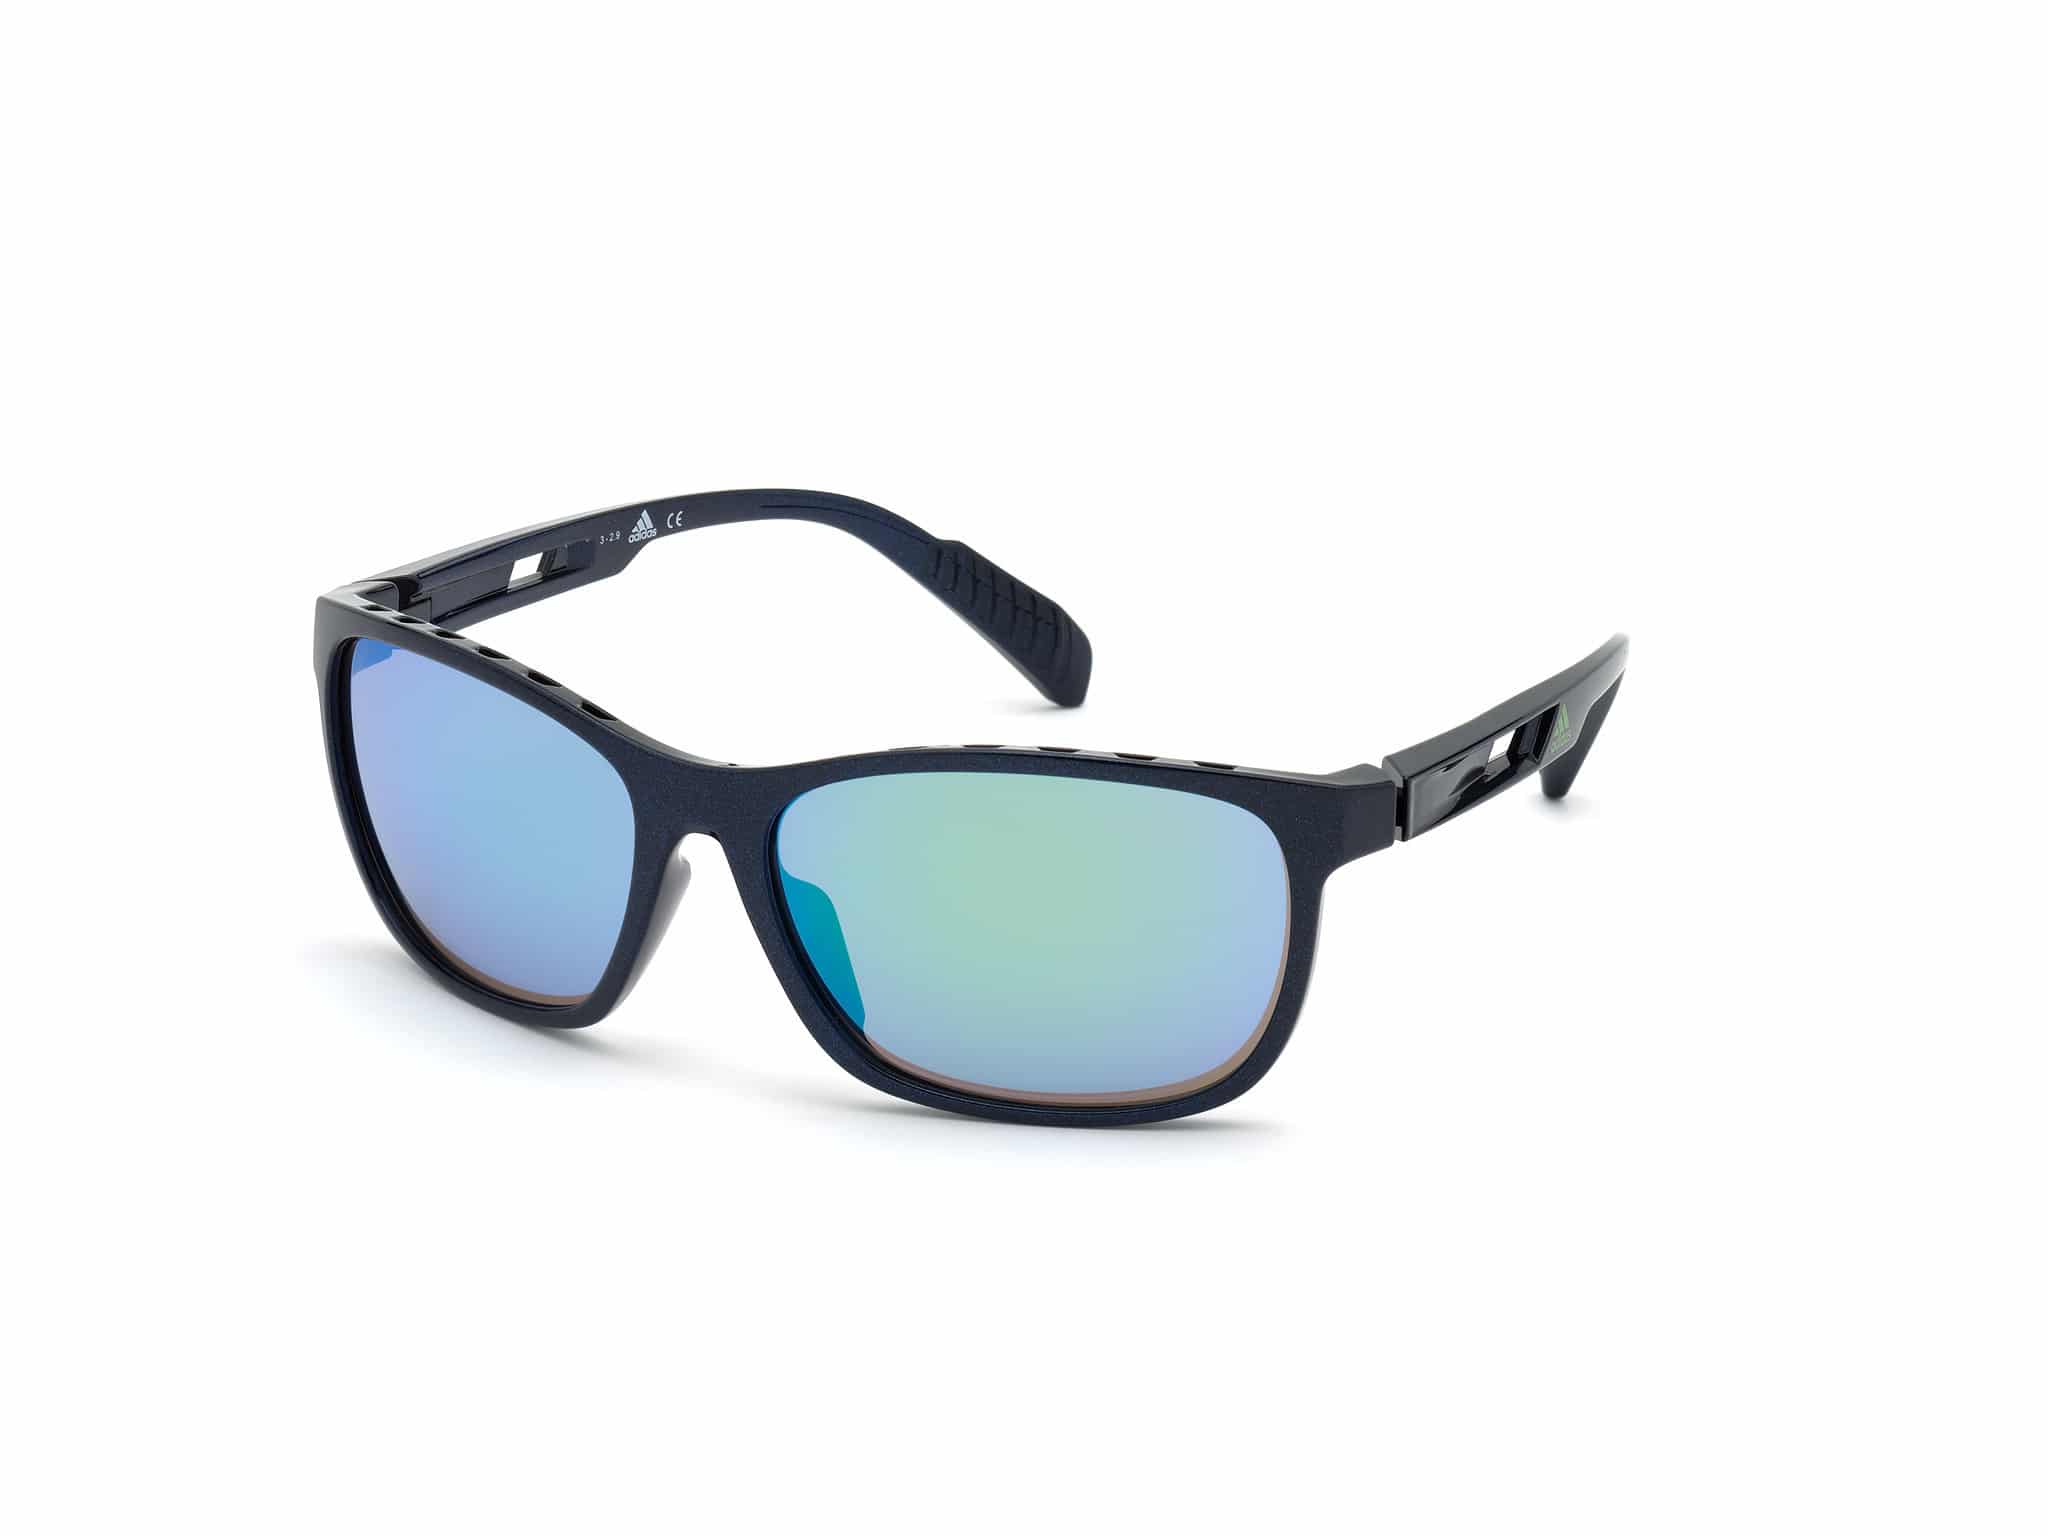 Adidas SP0014 Sunglasses - SafetyGearPro.com